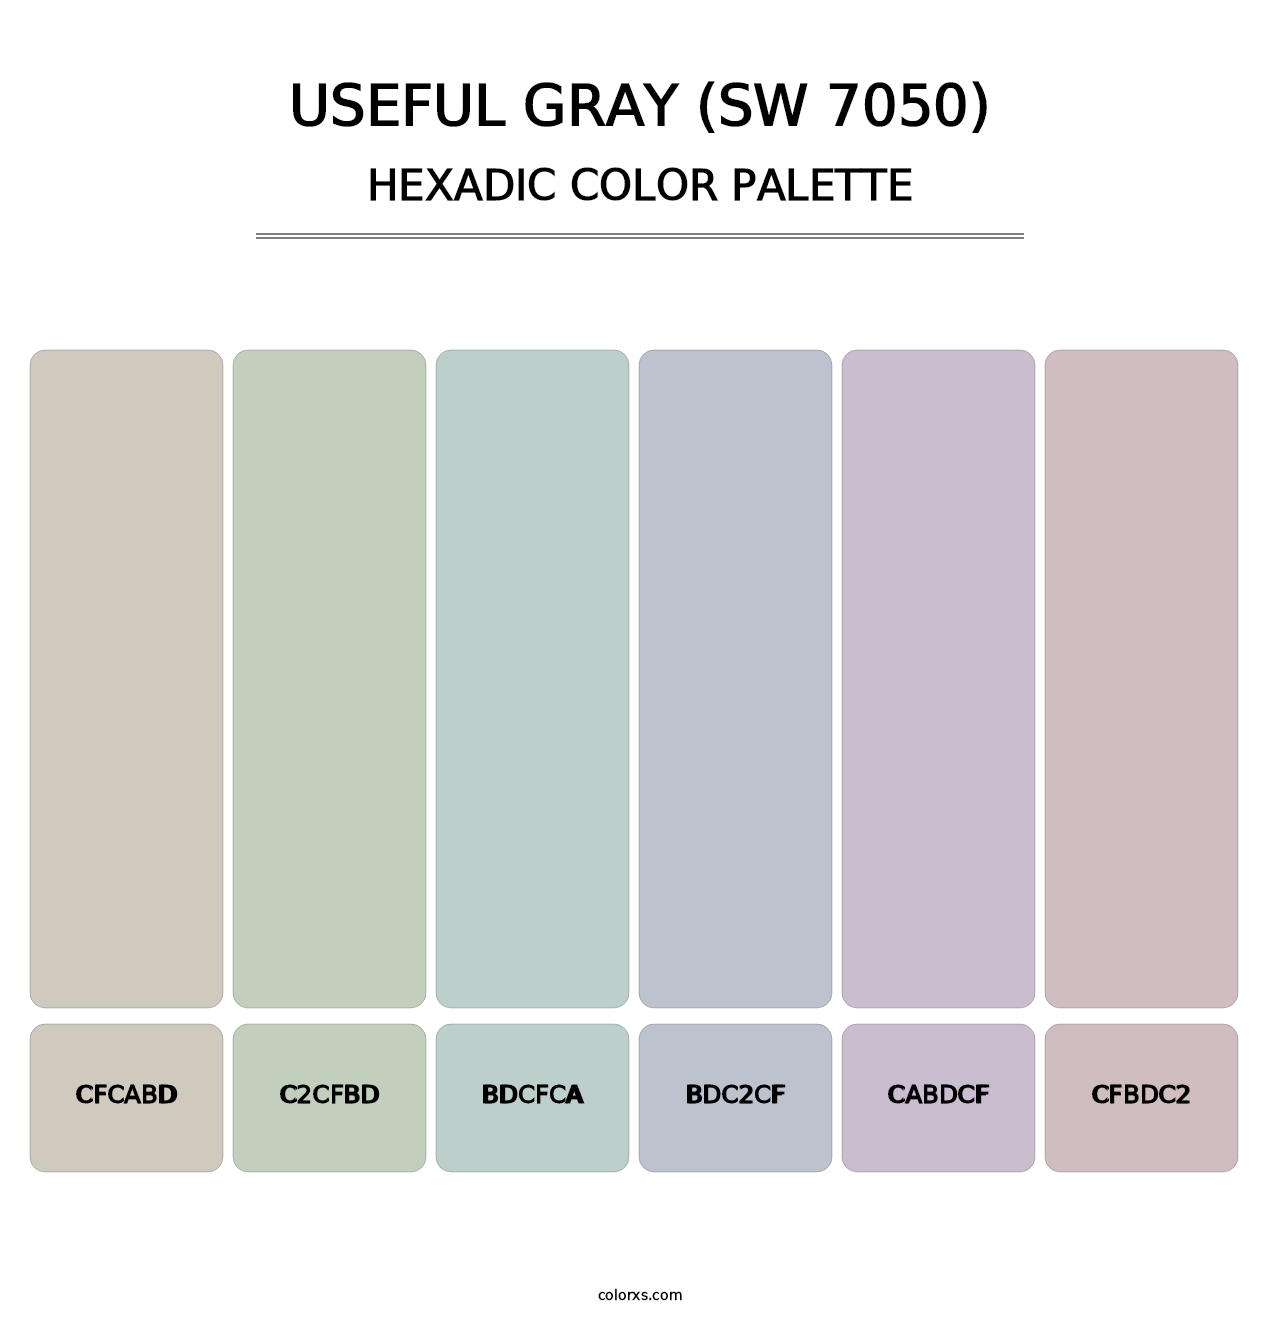 Useful Gray (SW 7050) - Hexadic Color Palette